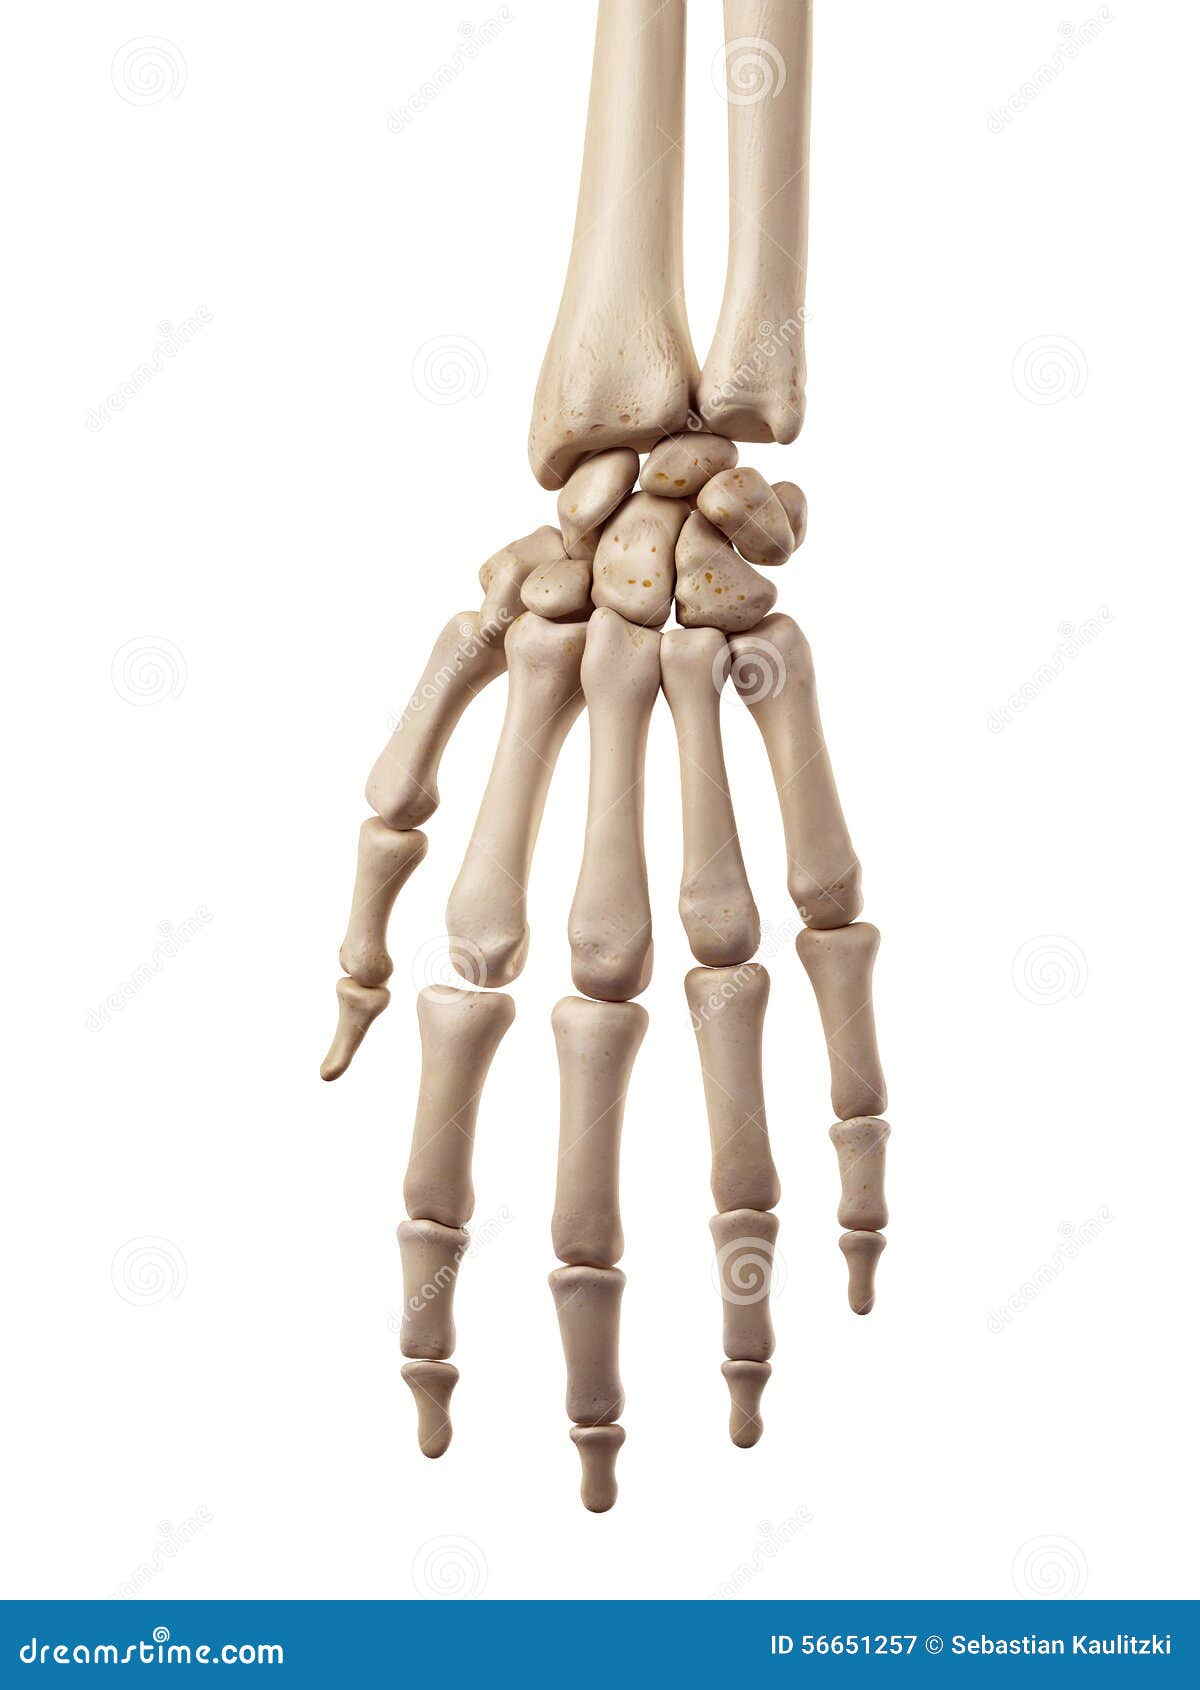 the hand bones